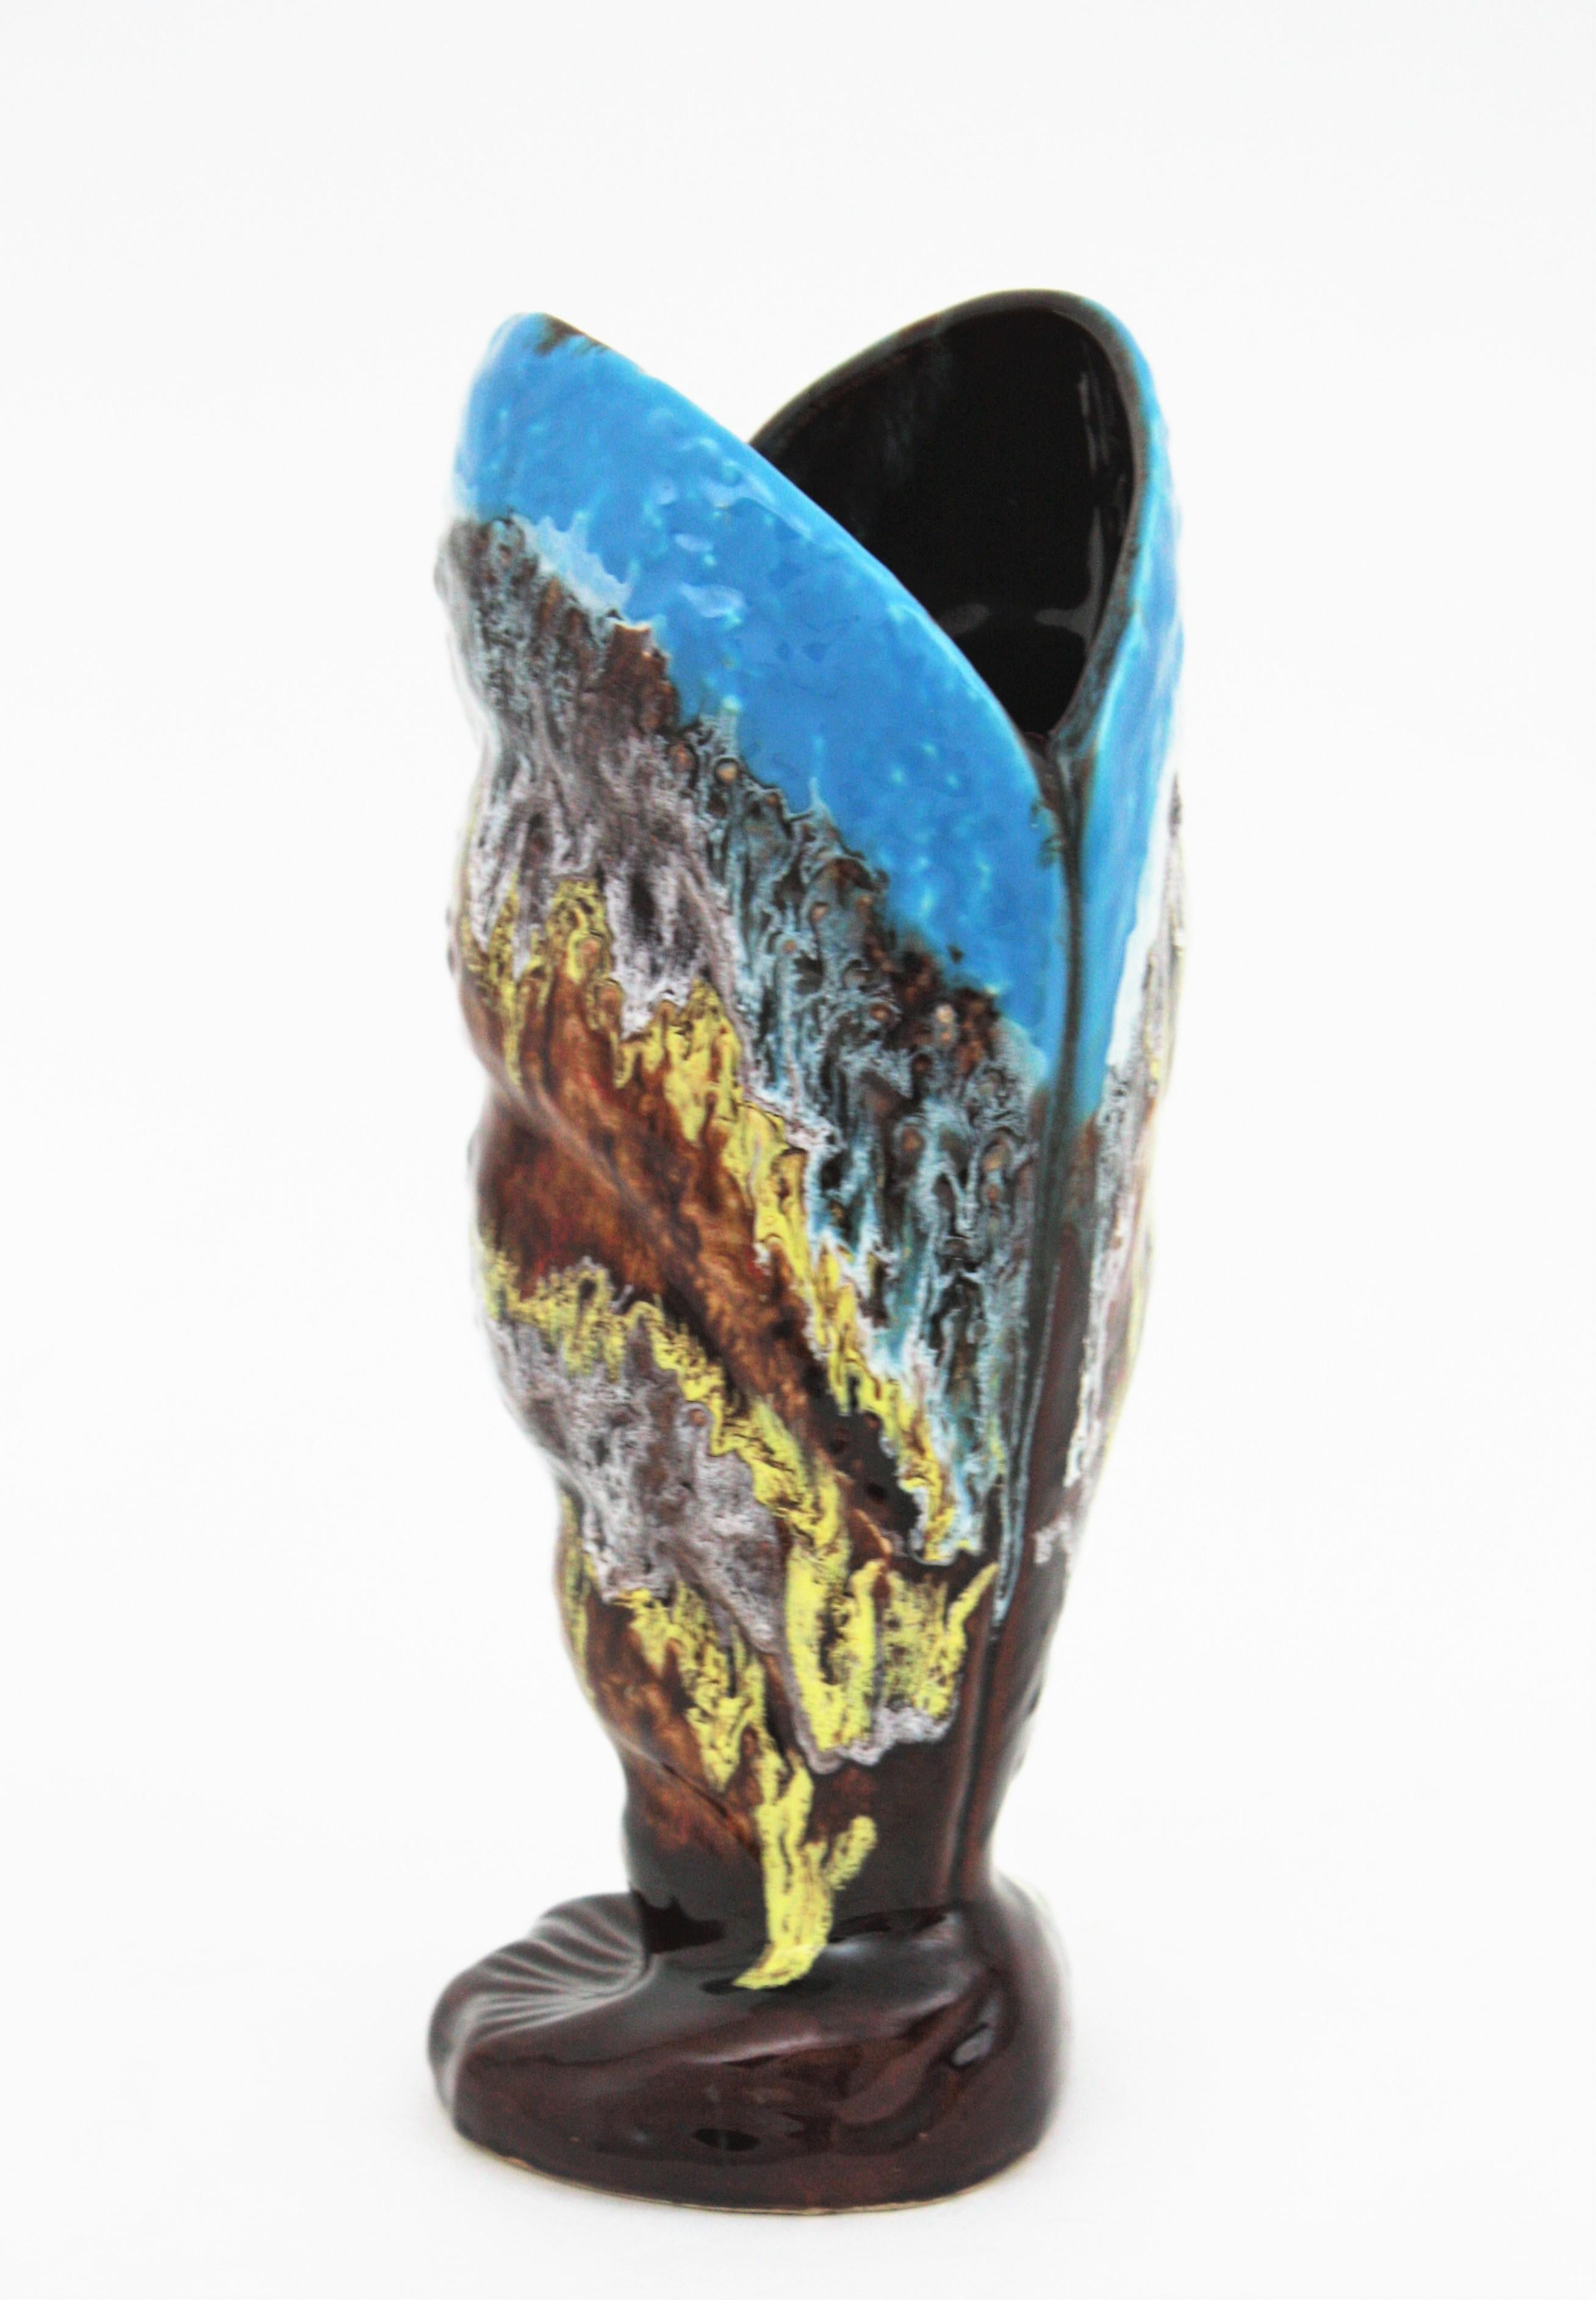 French Vallauris Majolica Shell Shaped Vase in Multi Color Glazed Ceramic For Sale 3